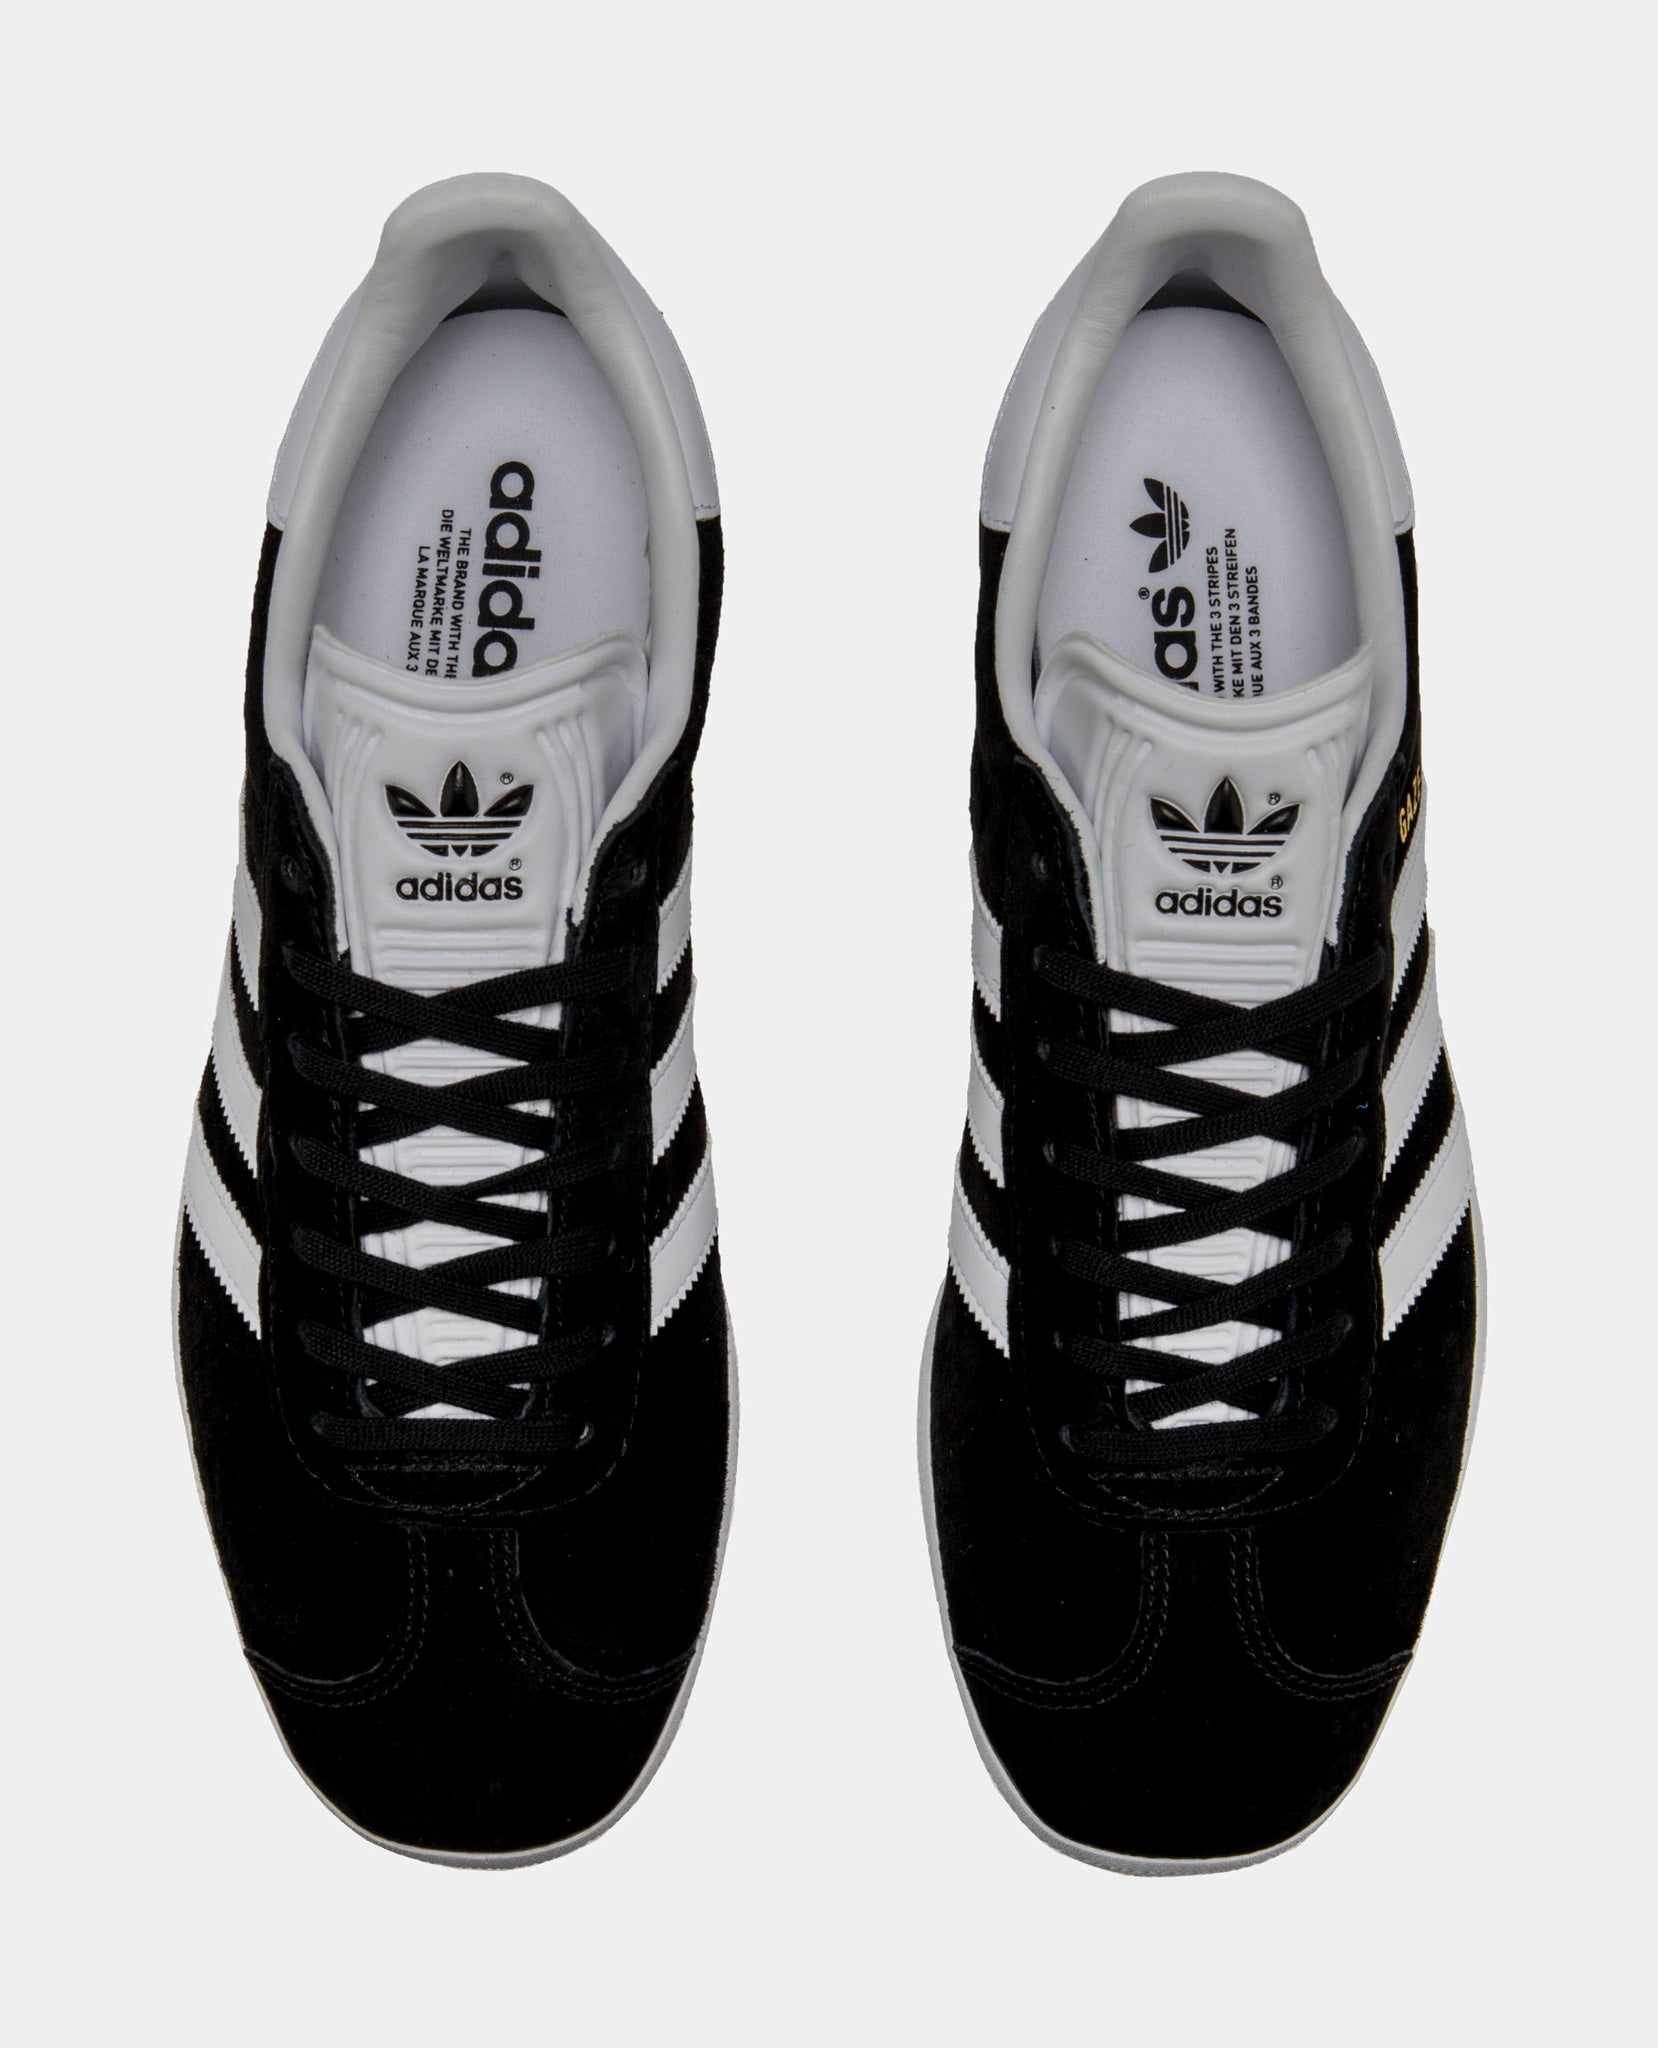 adidas Originals Low Mens Lifestyle Shoes Black White BB5476 – Shoe Palace